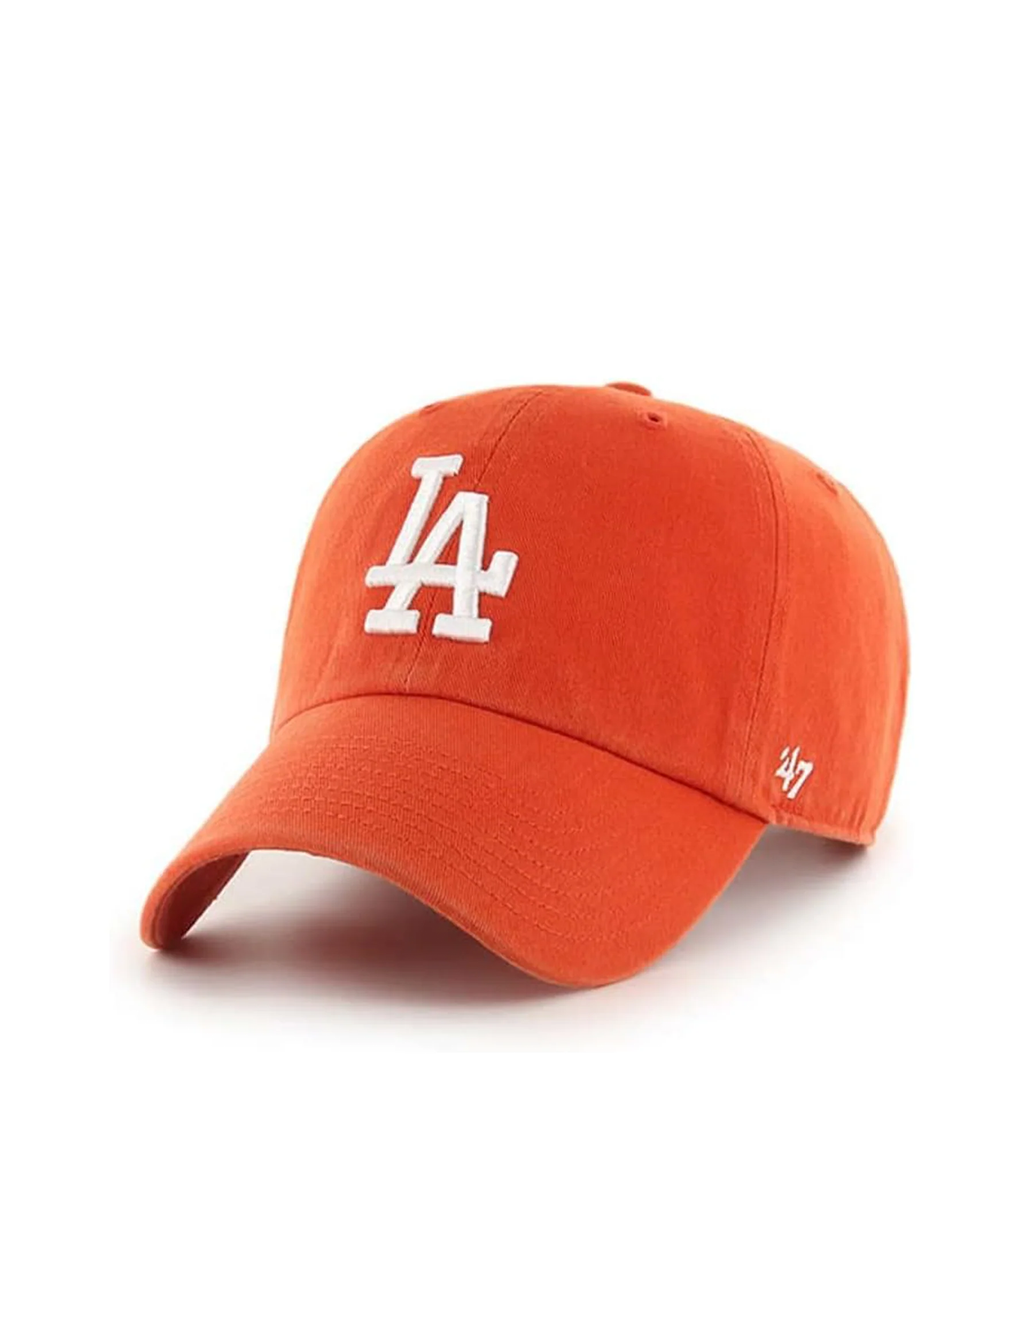 LA Dodgers Basic Ball Cap, Orange/White